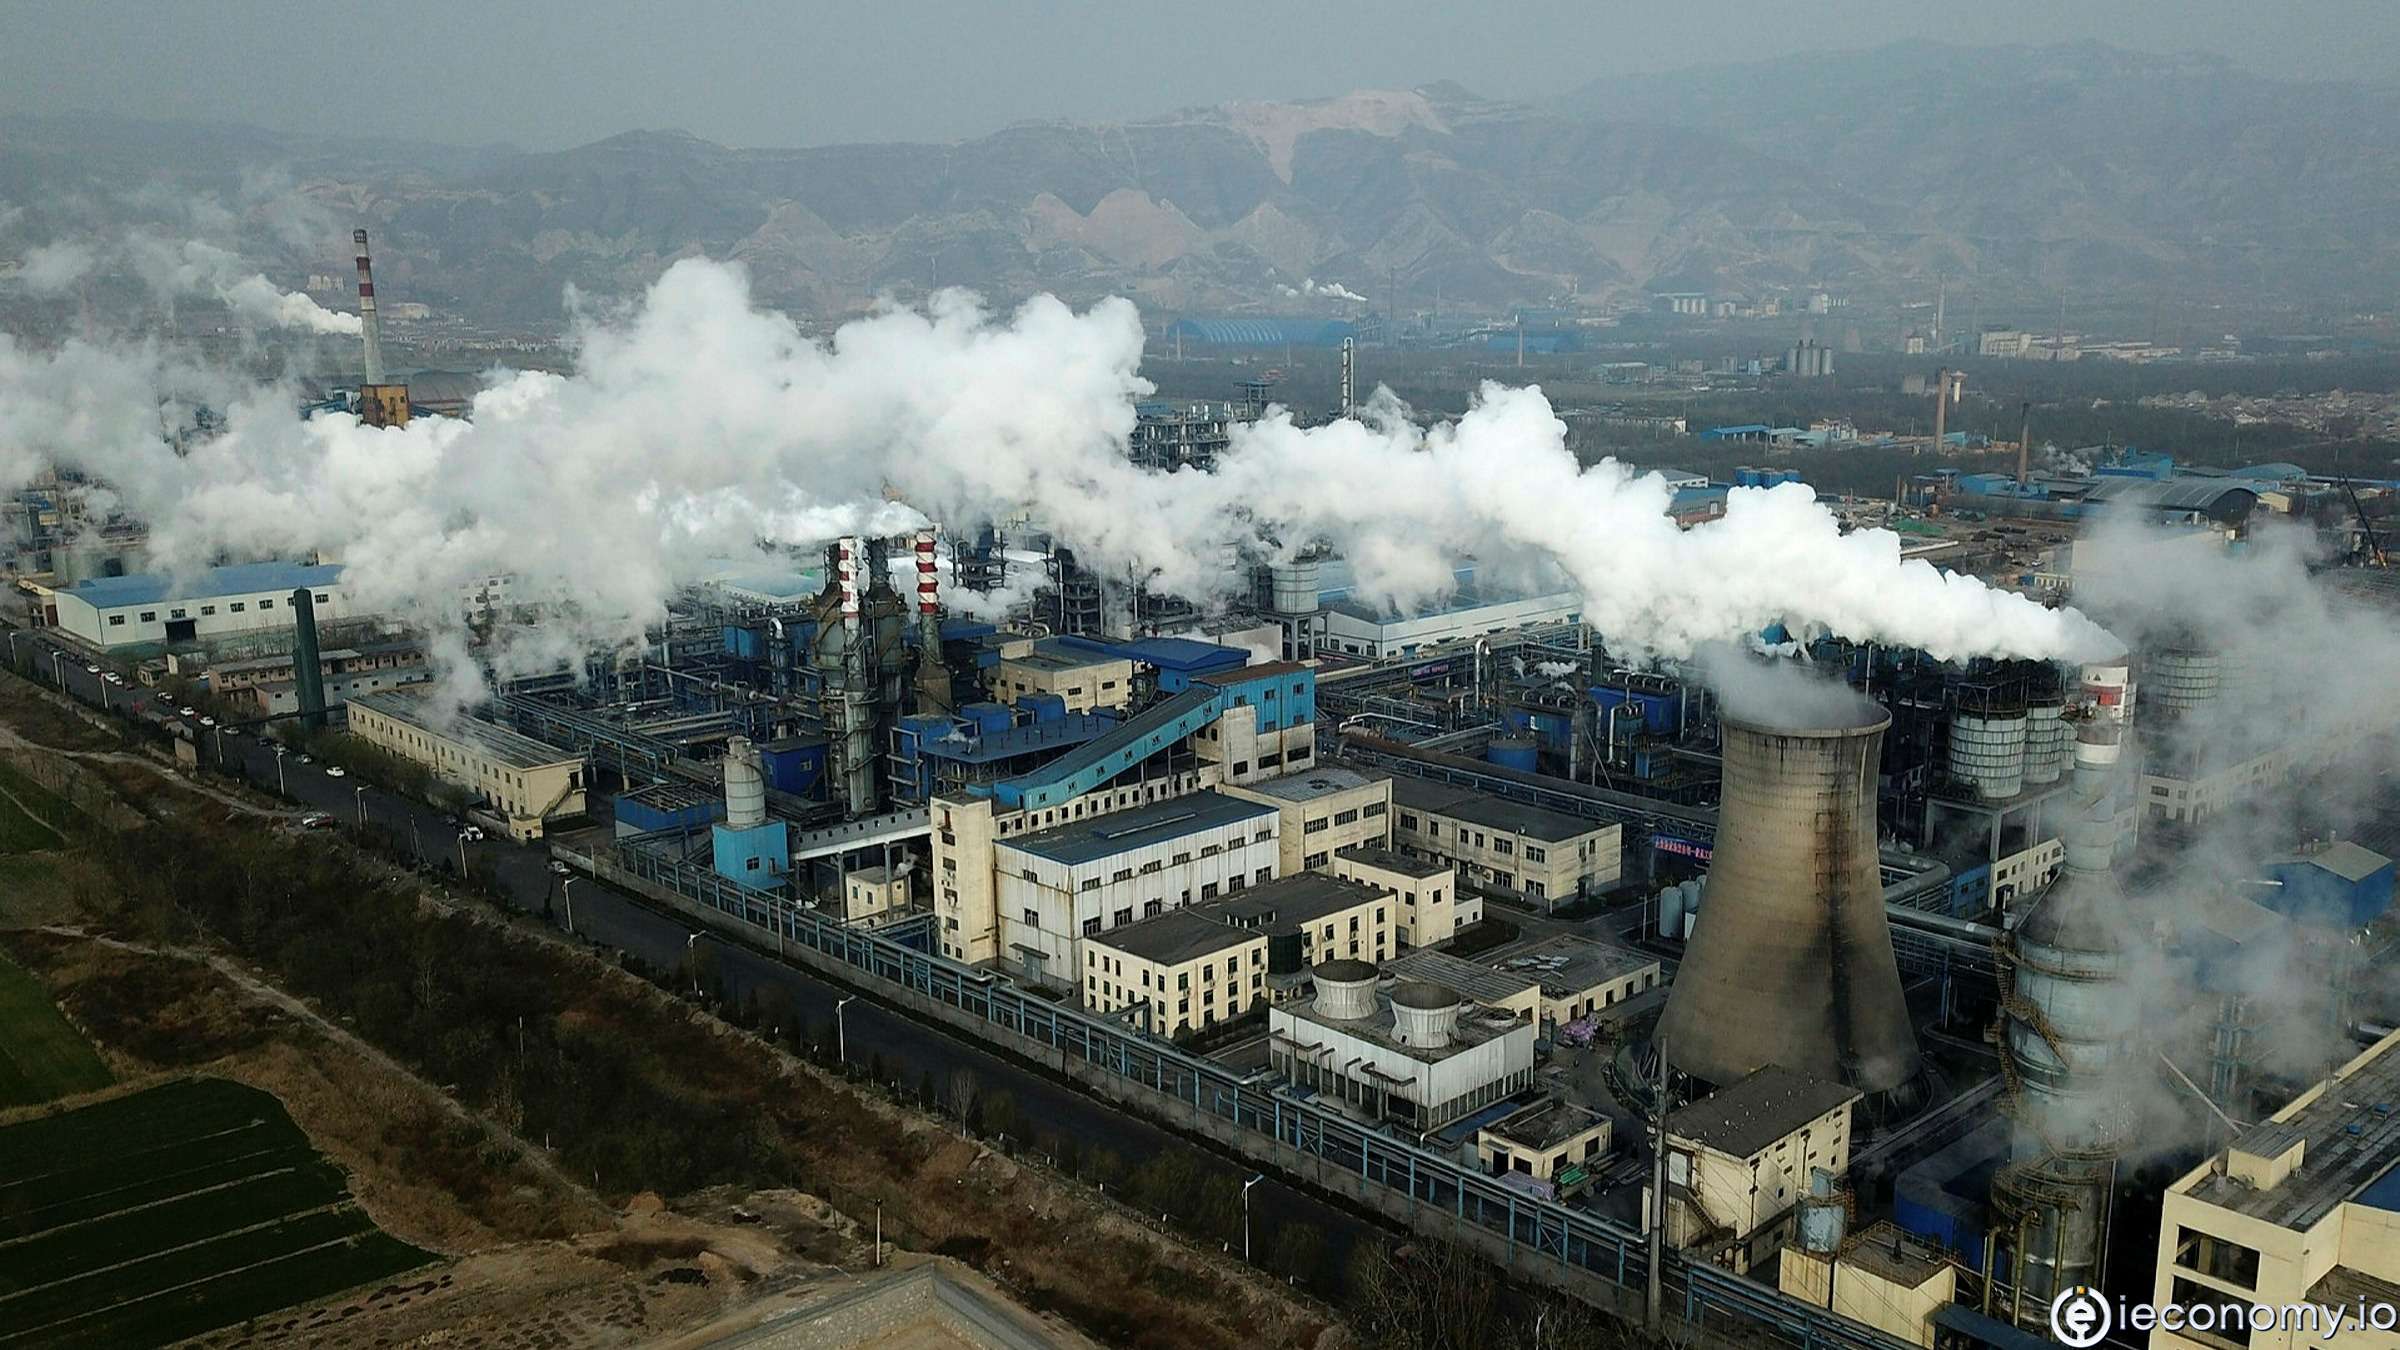 China's emissions trading opened at 48 yuan per ton